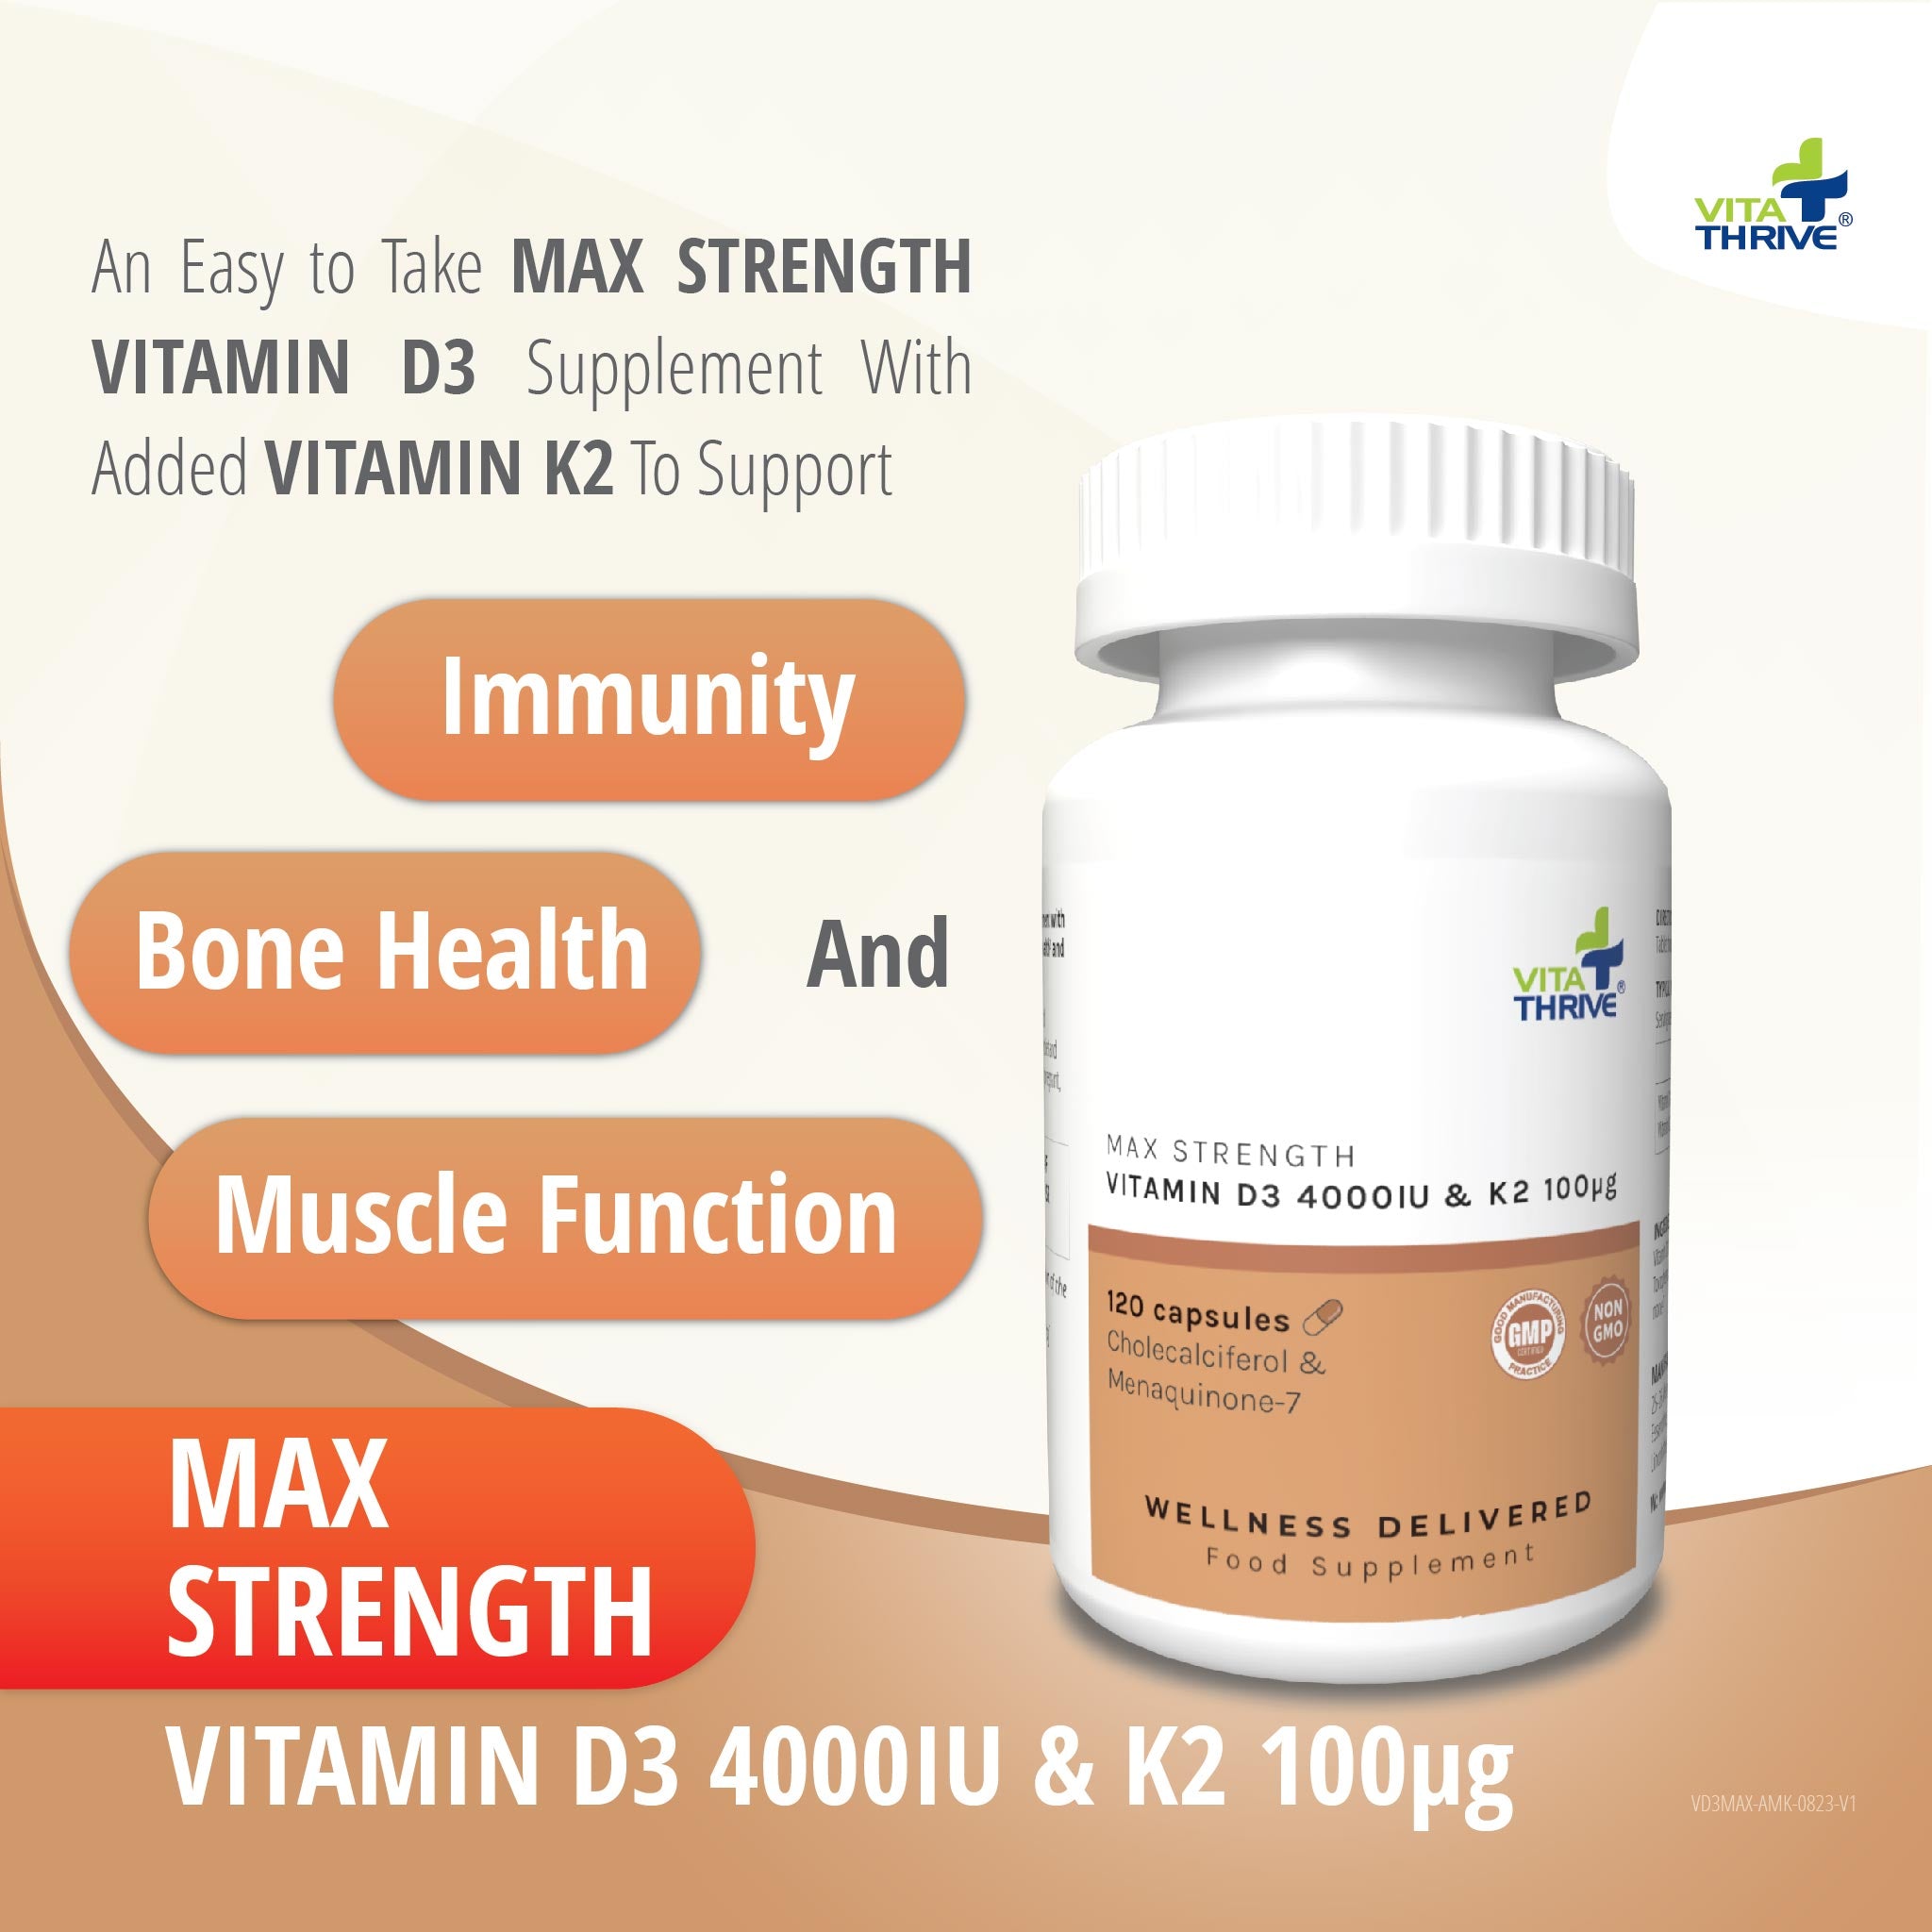 VitaThrive® Max Strength Vitamin D3 4,000iu (100µg) & Vitamin K2 100µg Capsules